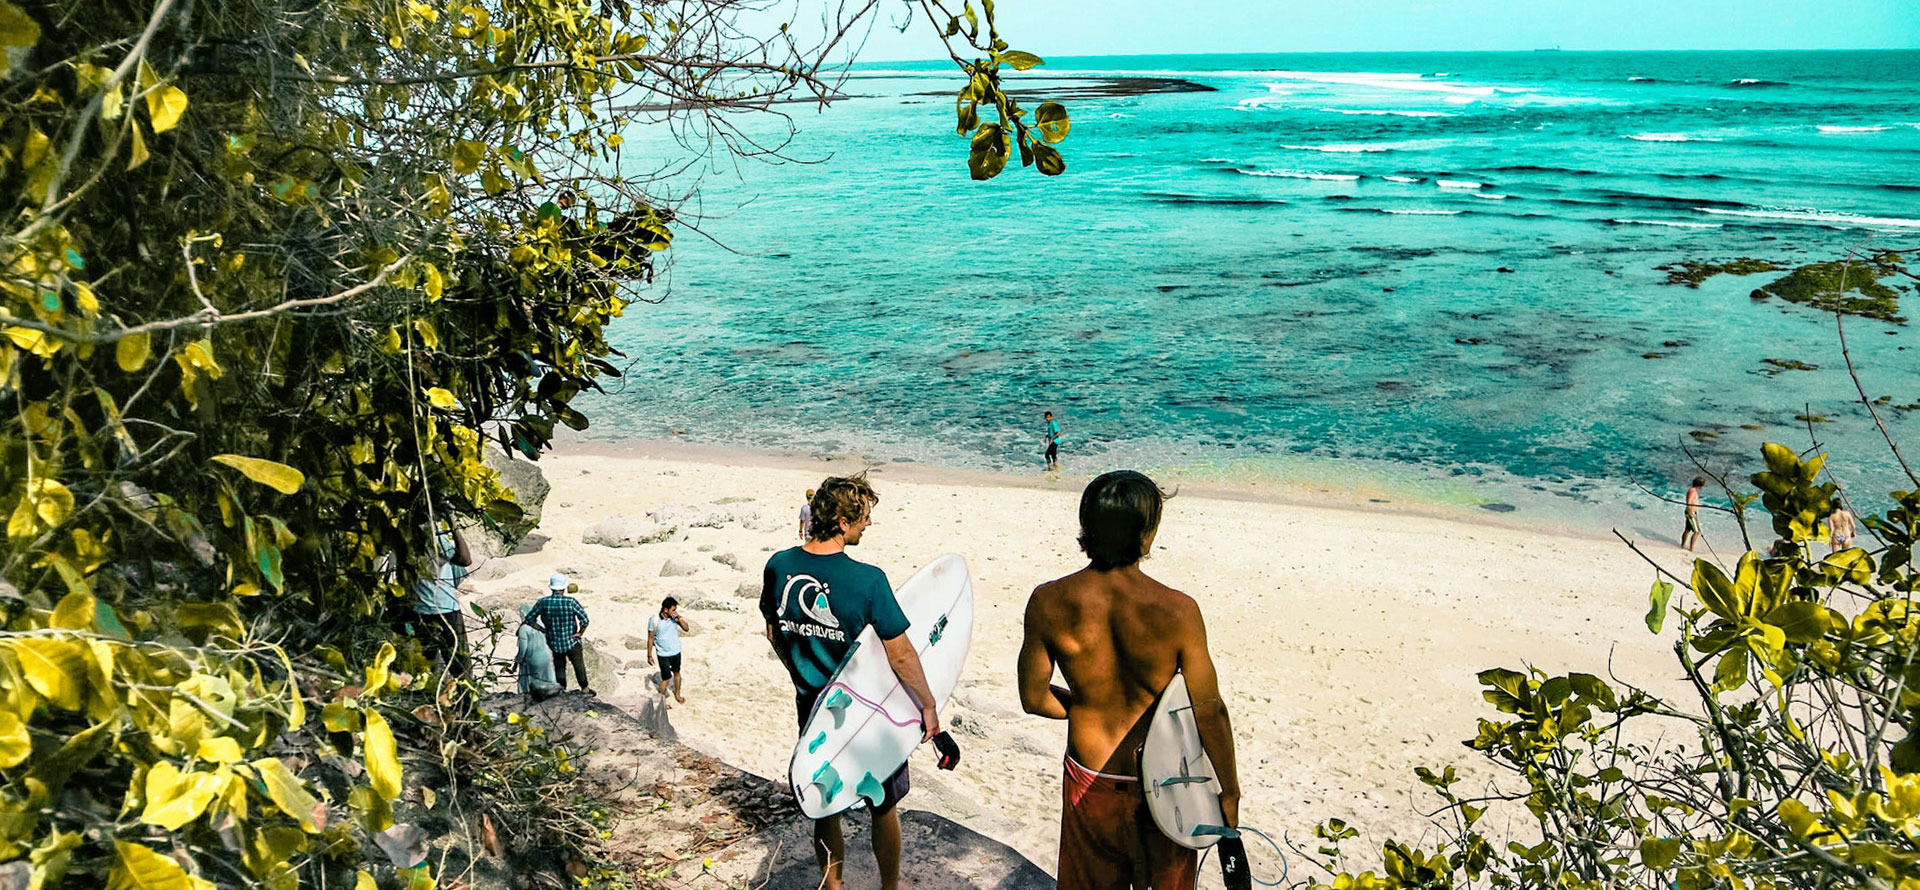 Surfing in Bali.